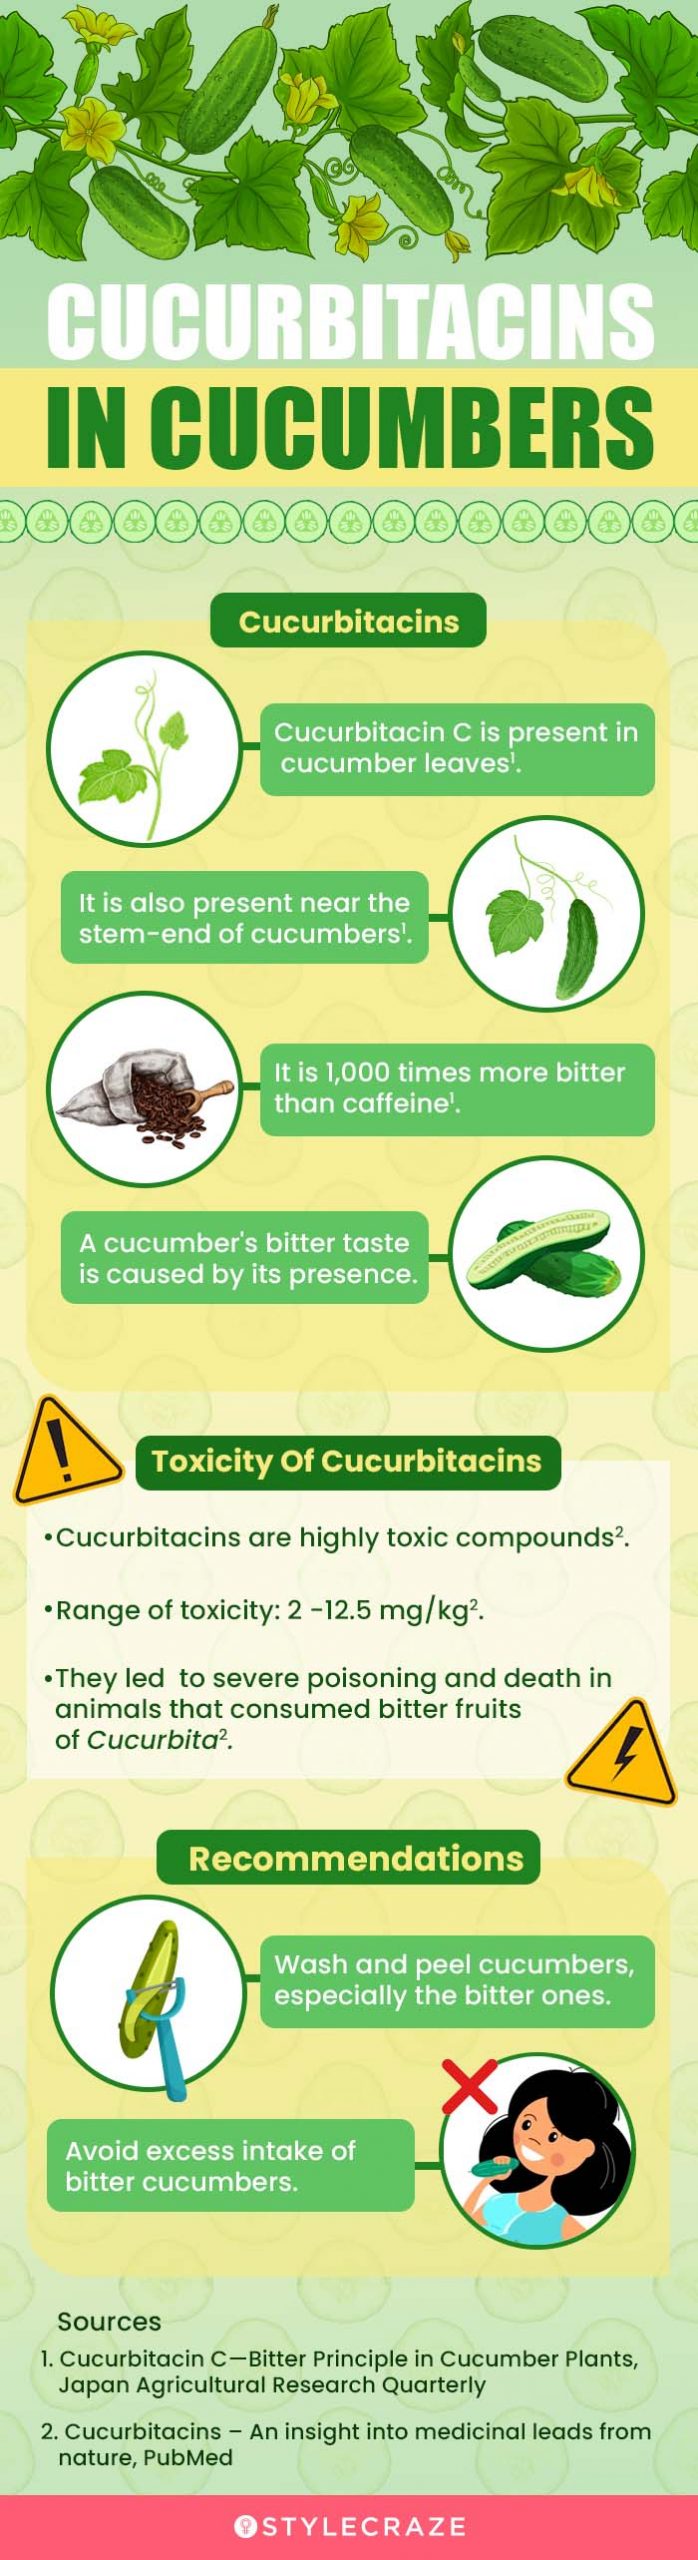 cucurbitacins in cucumbers (infographic)